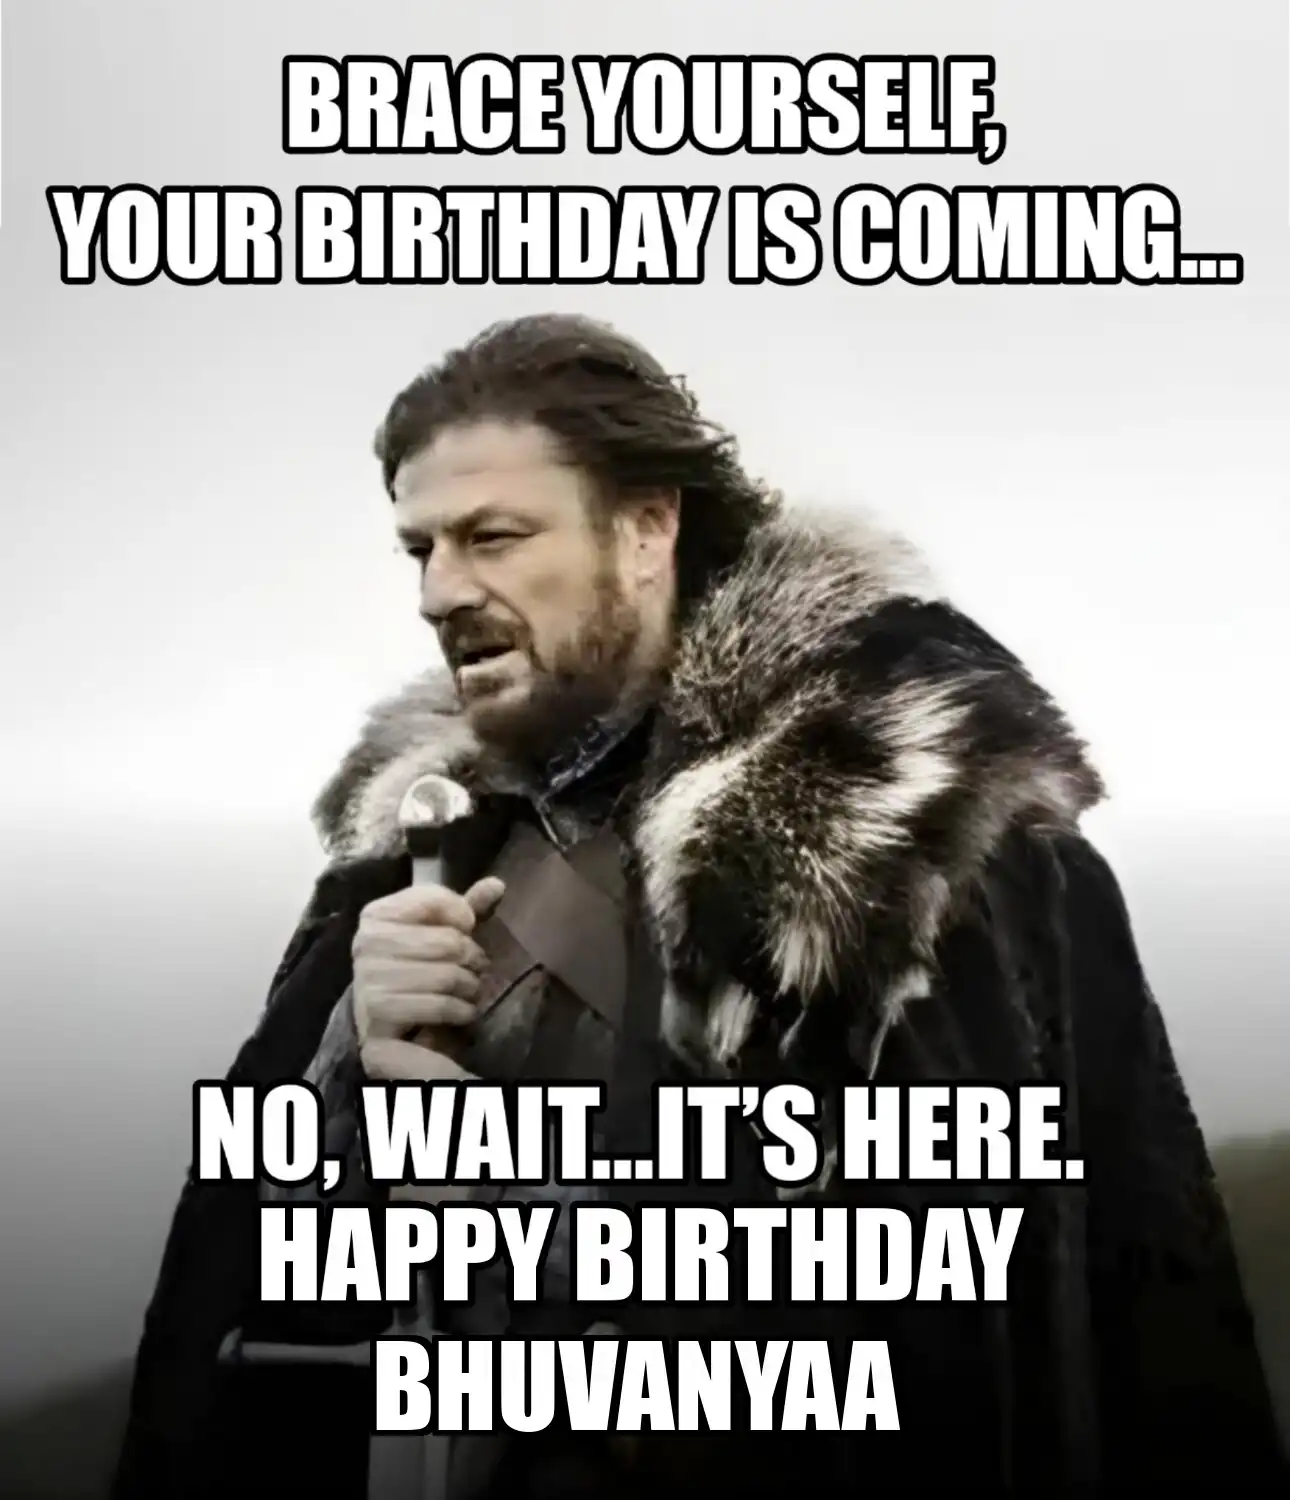 Happy Birthday Bhuvanyaa Brace Yourself Your Birthday Is Coming Meme